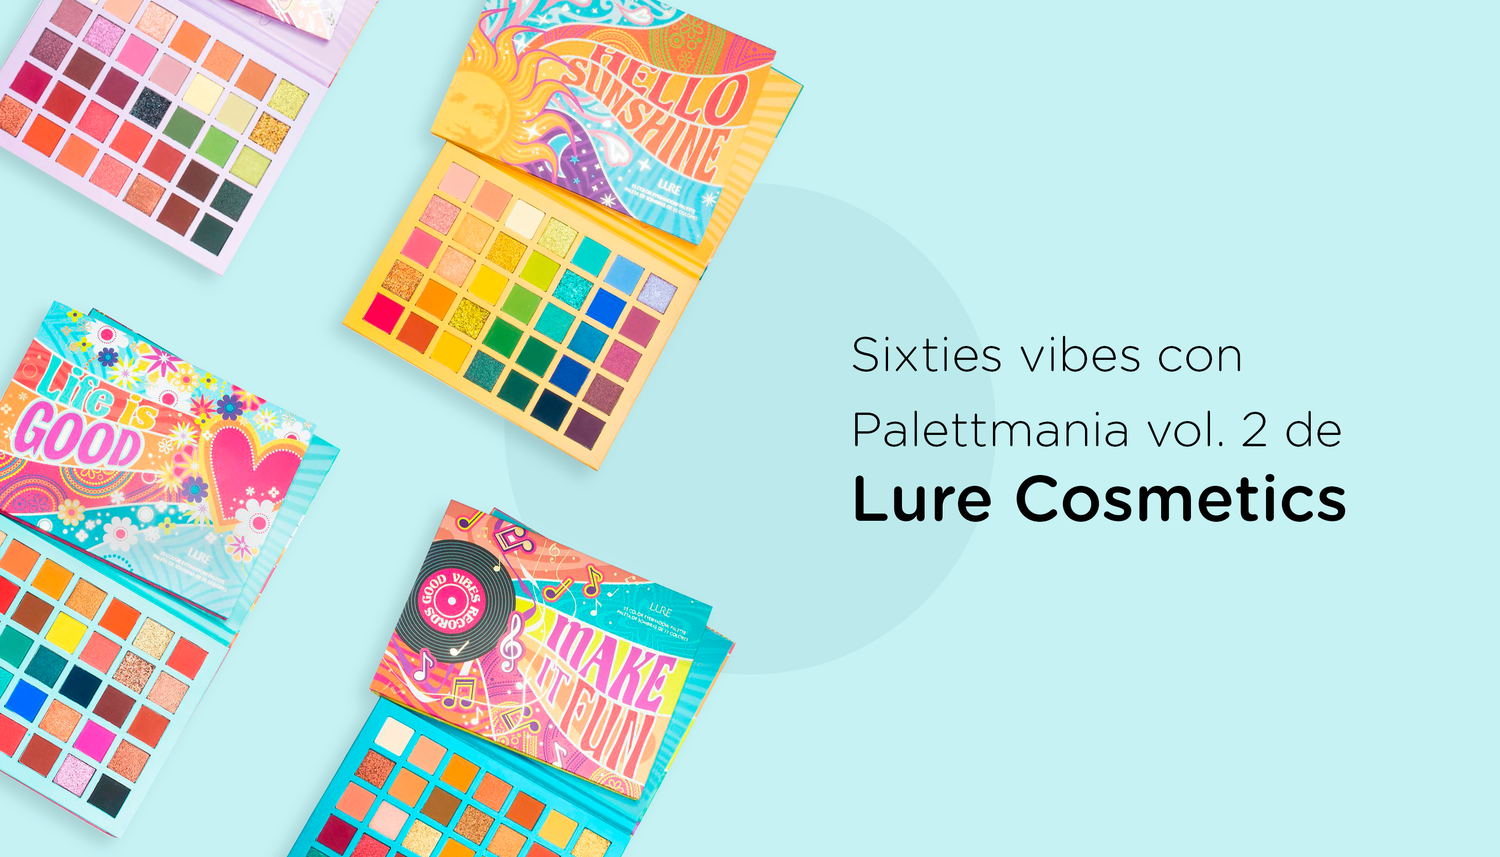 Sixties vibes con Palettmania vol. 2 de Lure Cosmetics